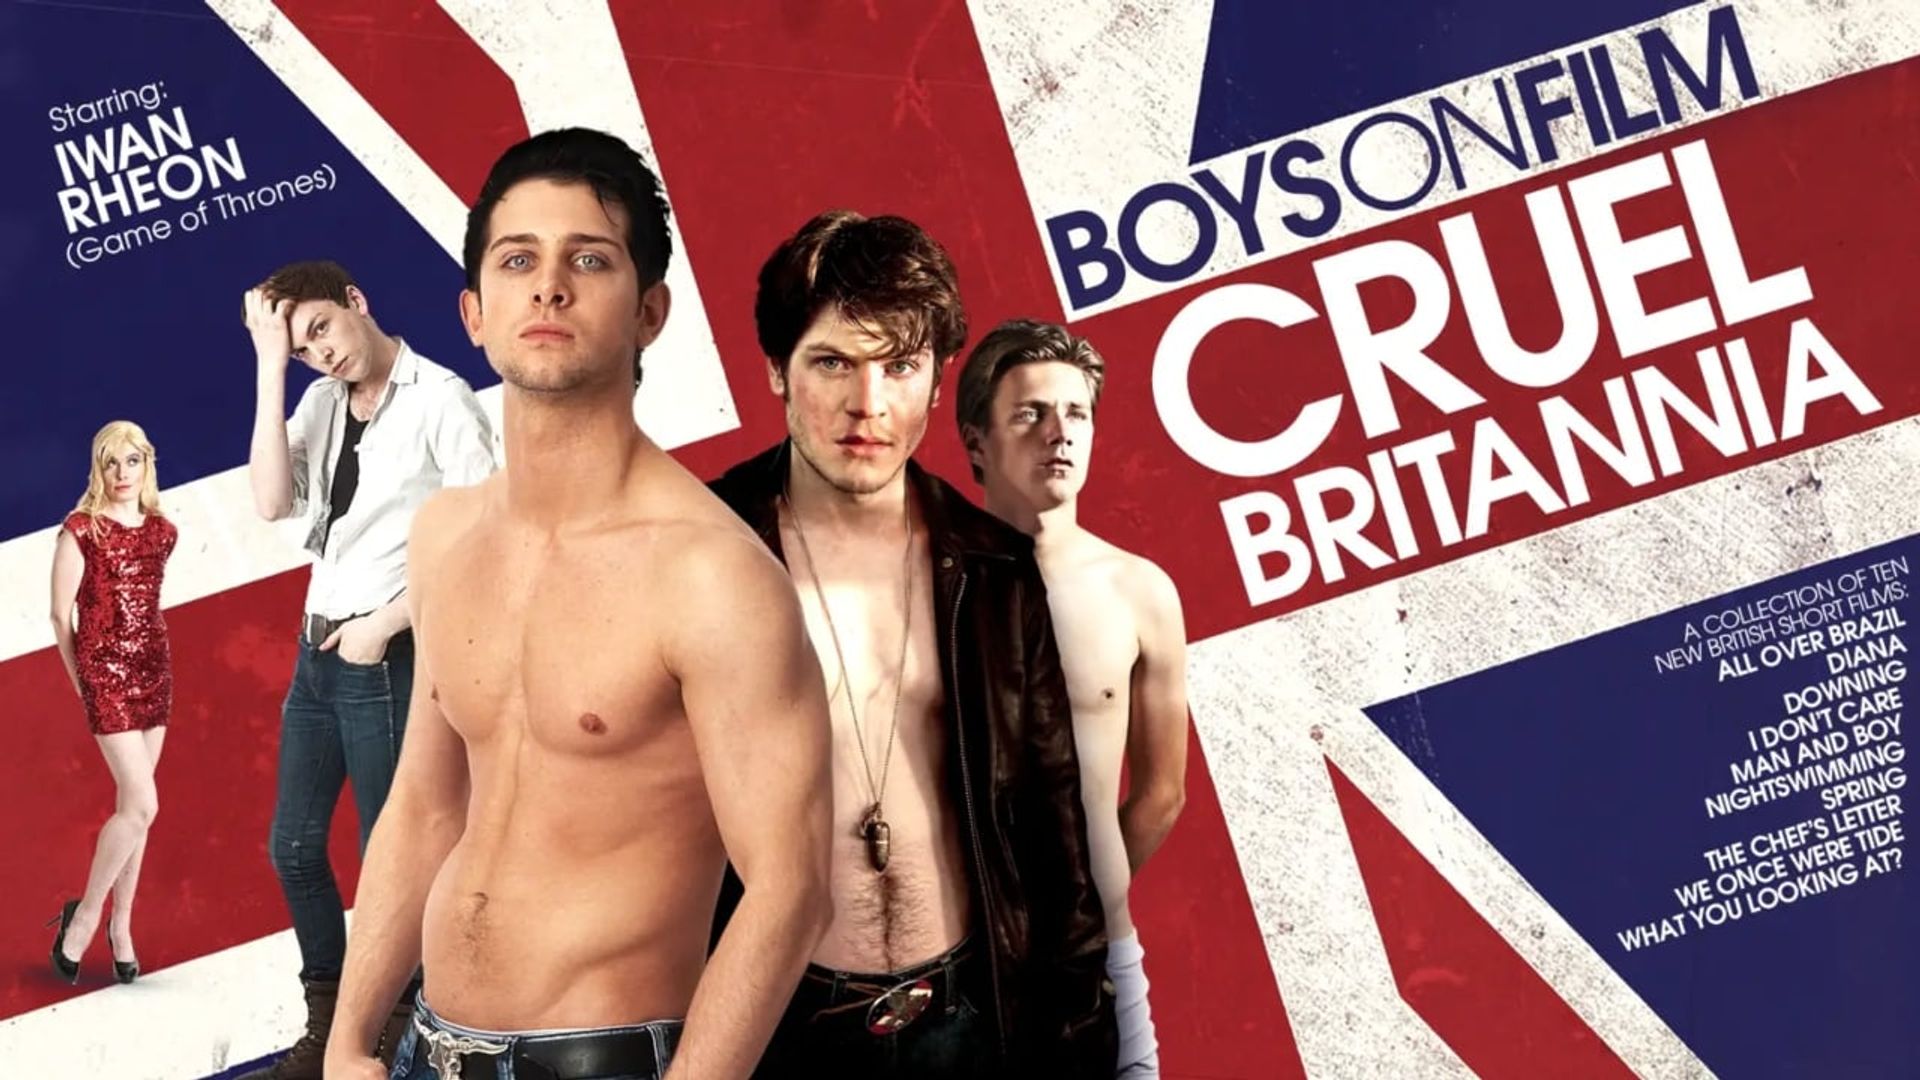 Boys on Film 8: Cruel Britannia background